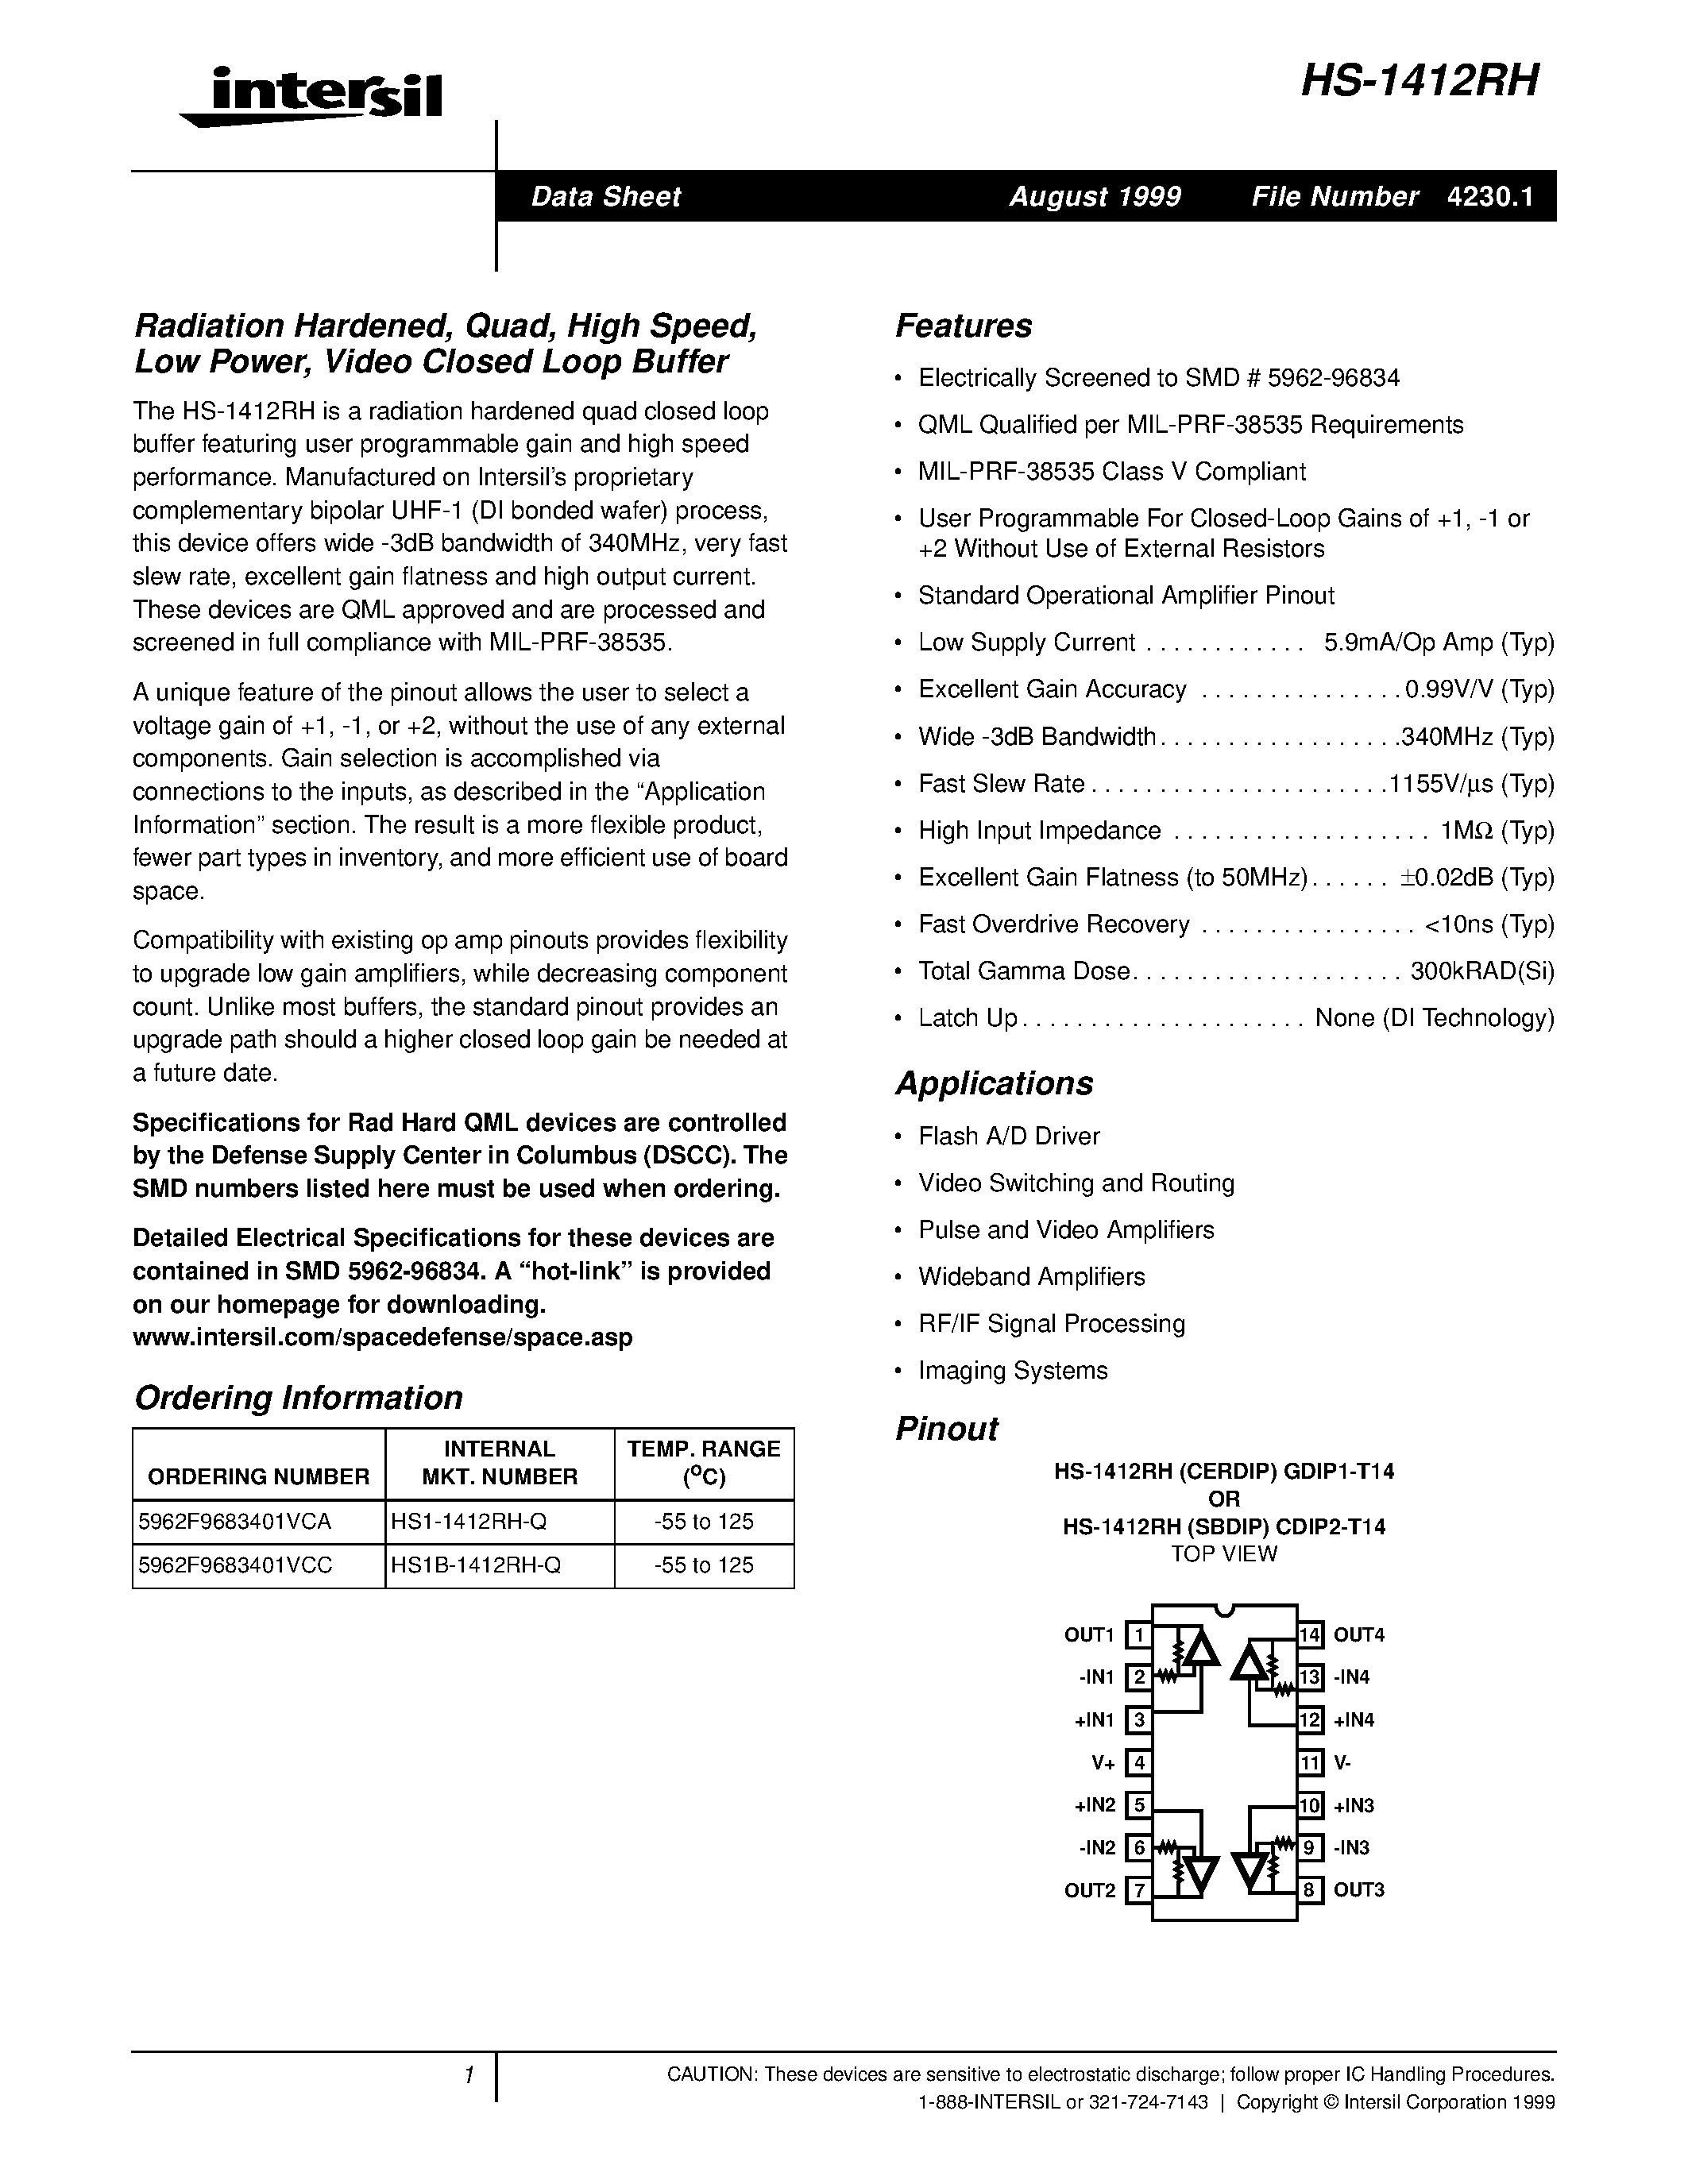 Даташит HS1B-1412RH-Q - Radiation Hardened/ Quad/ High Speed/ Low Power/ Video Closed Loop Buffer страница 1